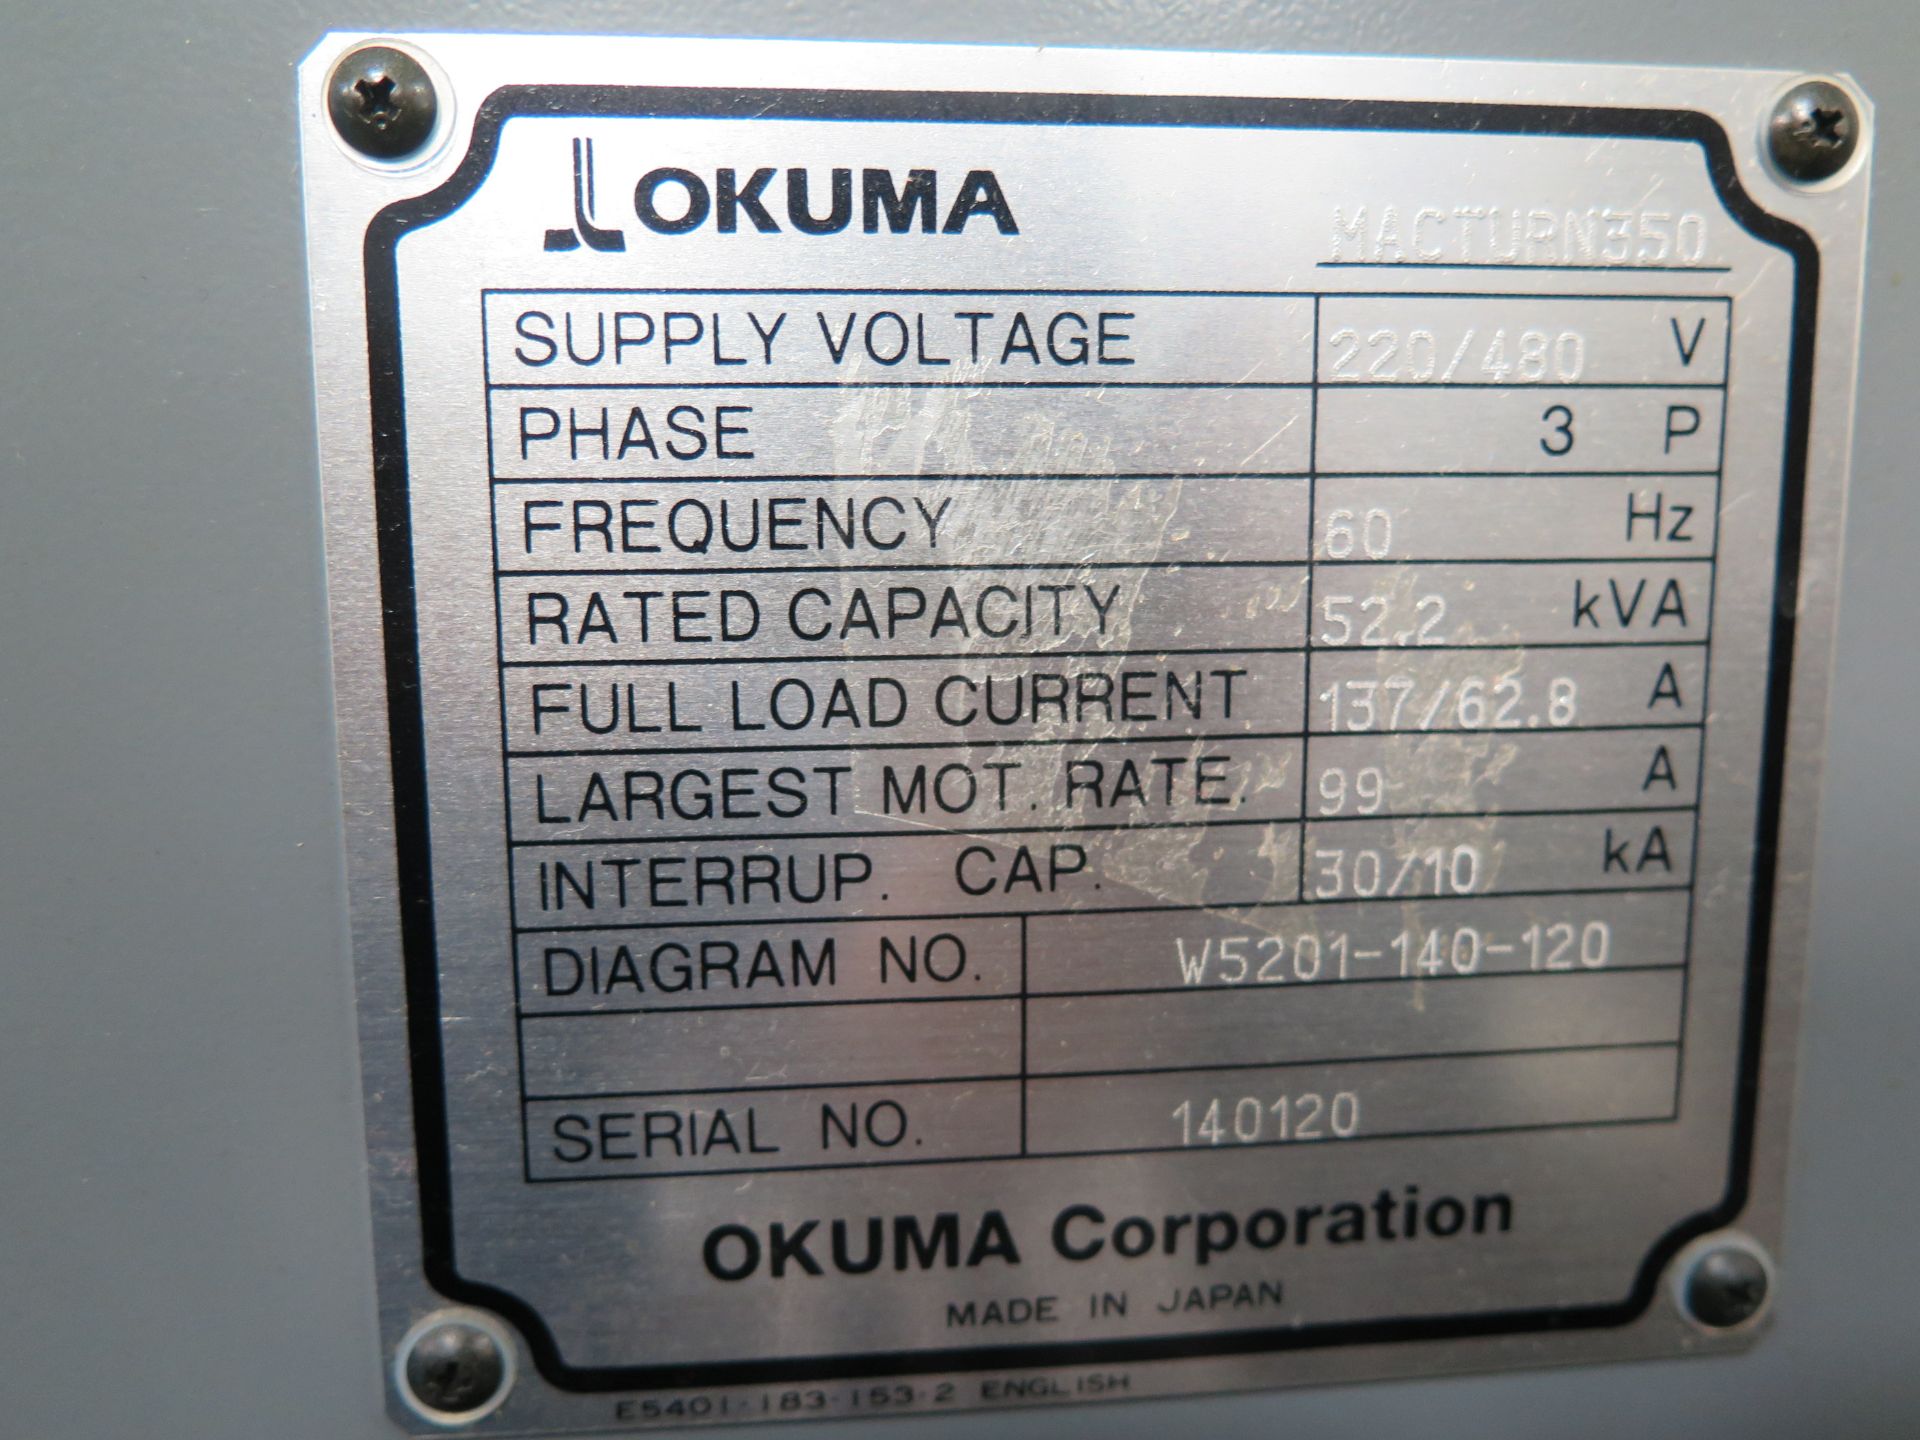 2008 OKUMA MACTURN 350-W MULTI-AXIS CNC TURNING CELL S/N 140120 W/ OKUMA OSP-P200L CONTROLS, HAND - Image 11 of 13